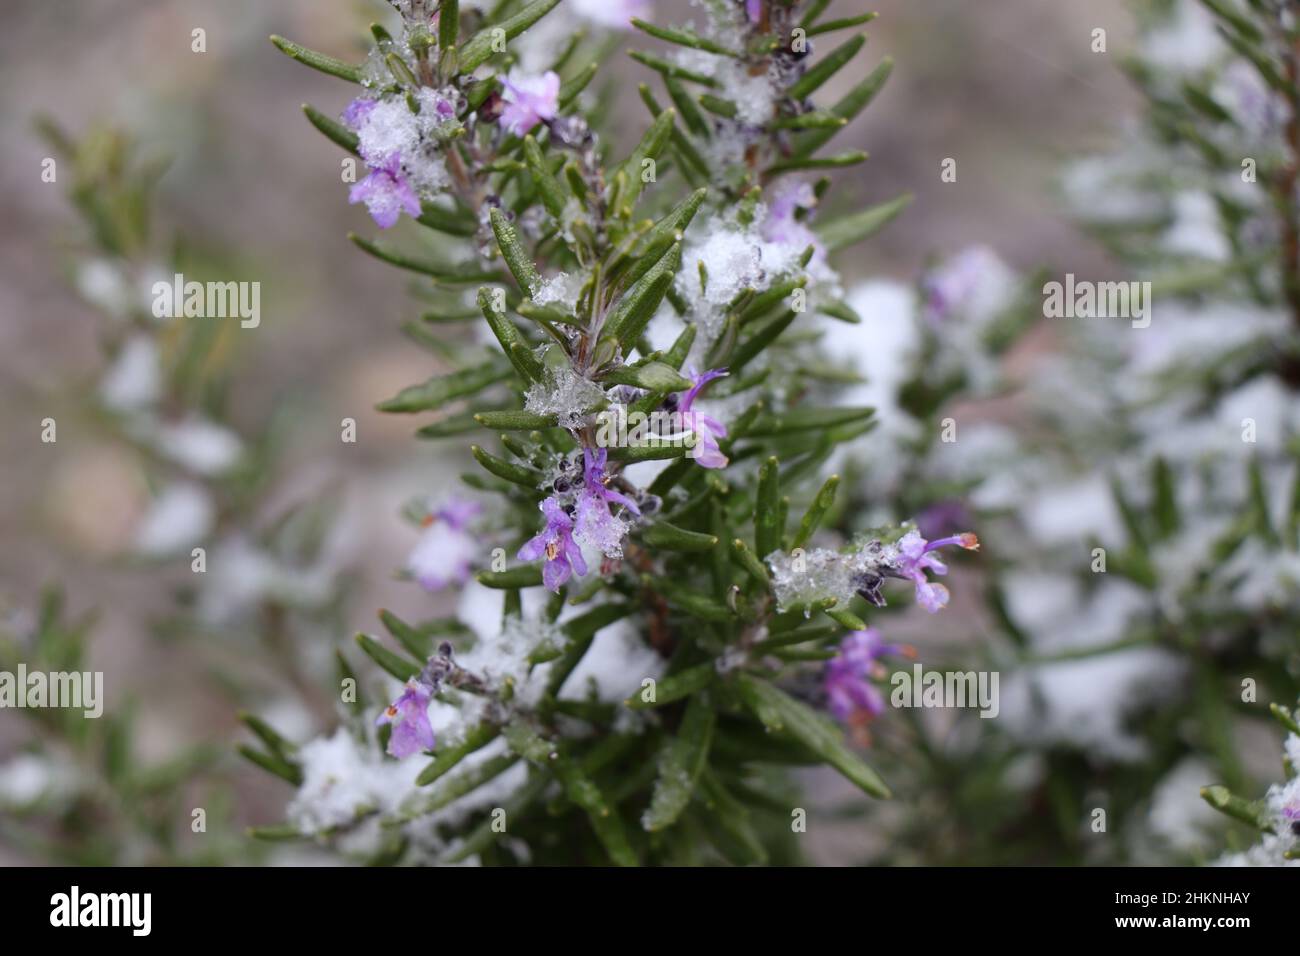 Garden herbs, rosemary blooms, ambiguity in winter Stock Photo